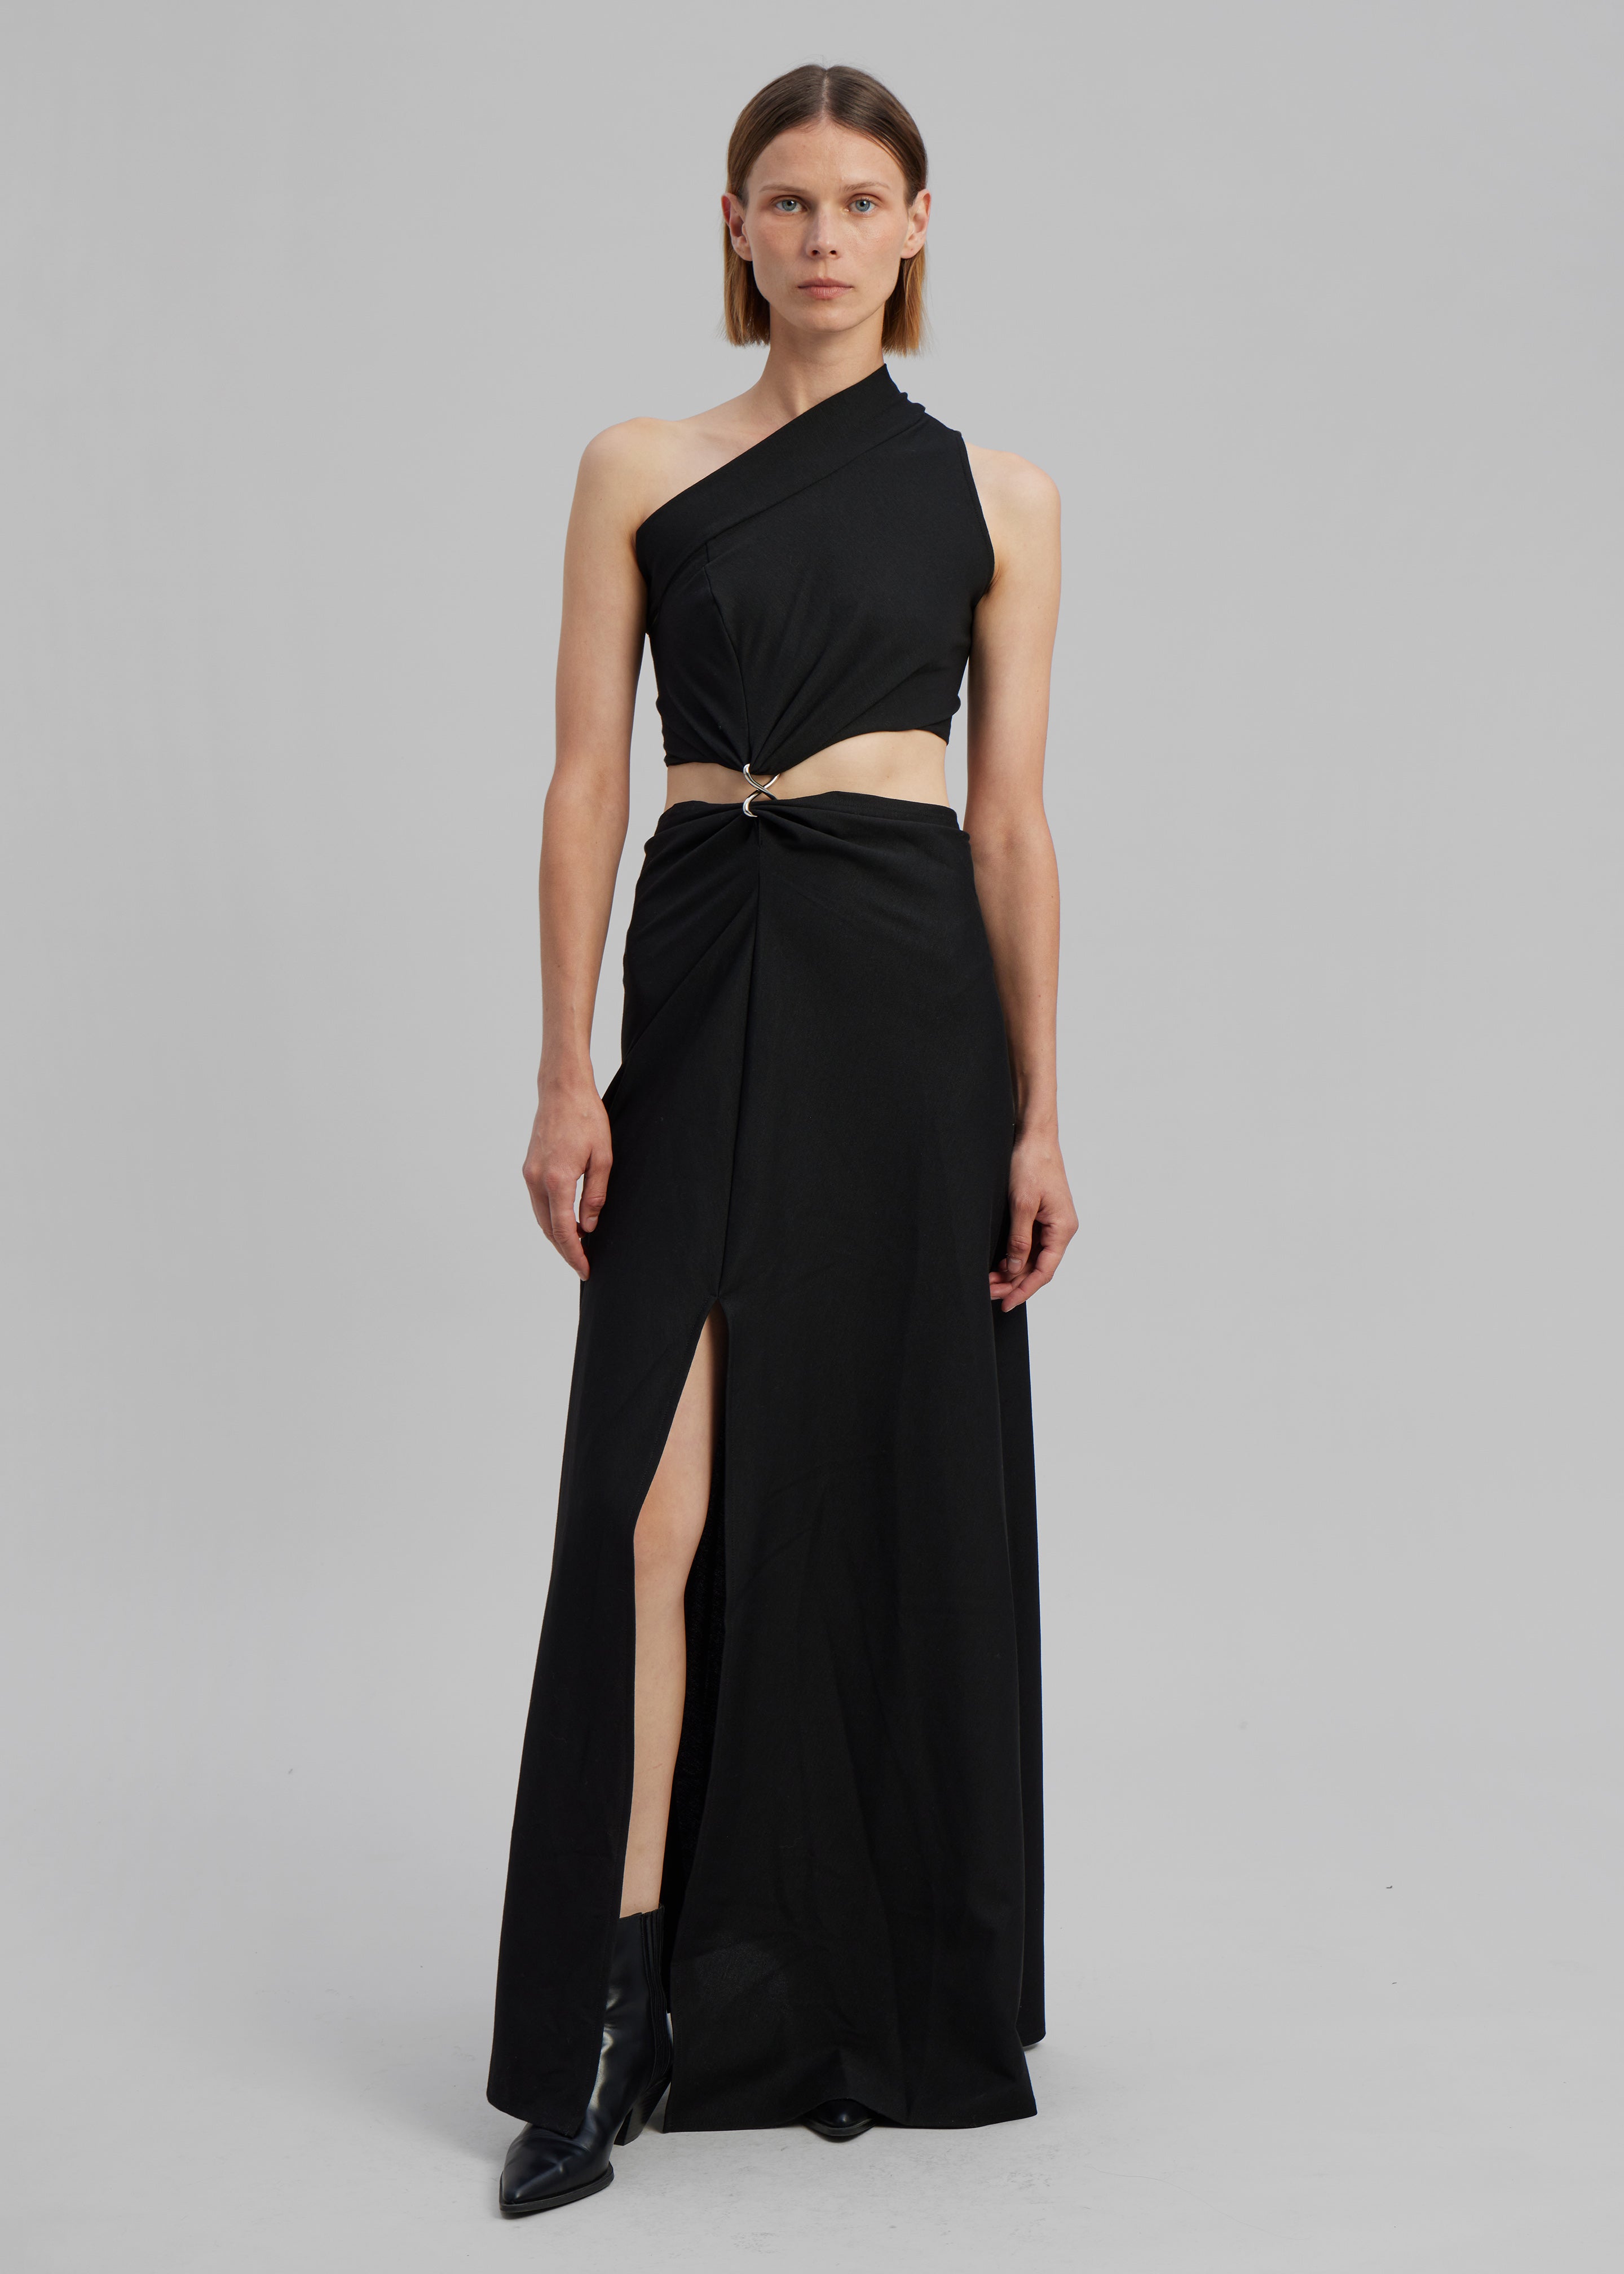 Sid Neigum Knit One-Shoulder Strap Dress W Hardware Detail - Black - 1